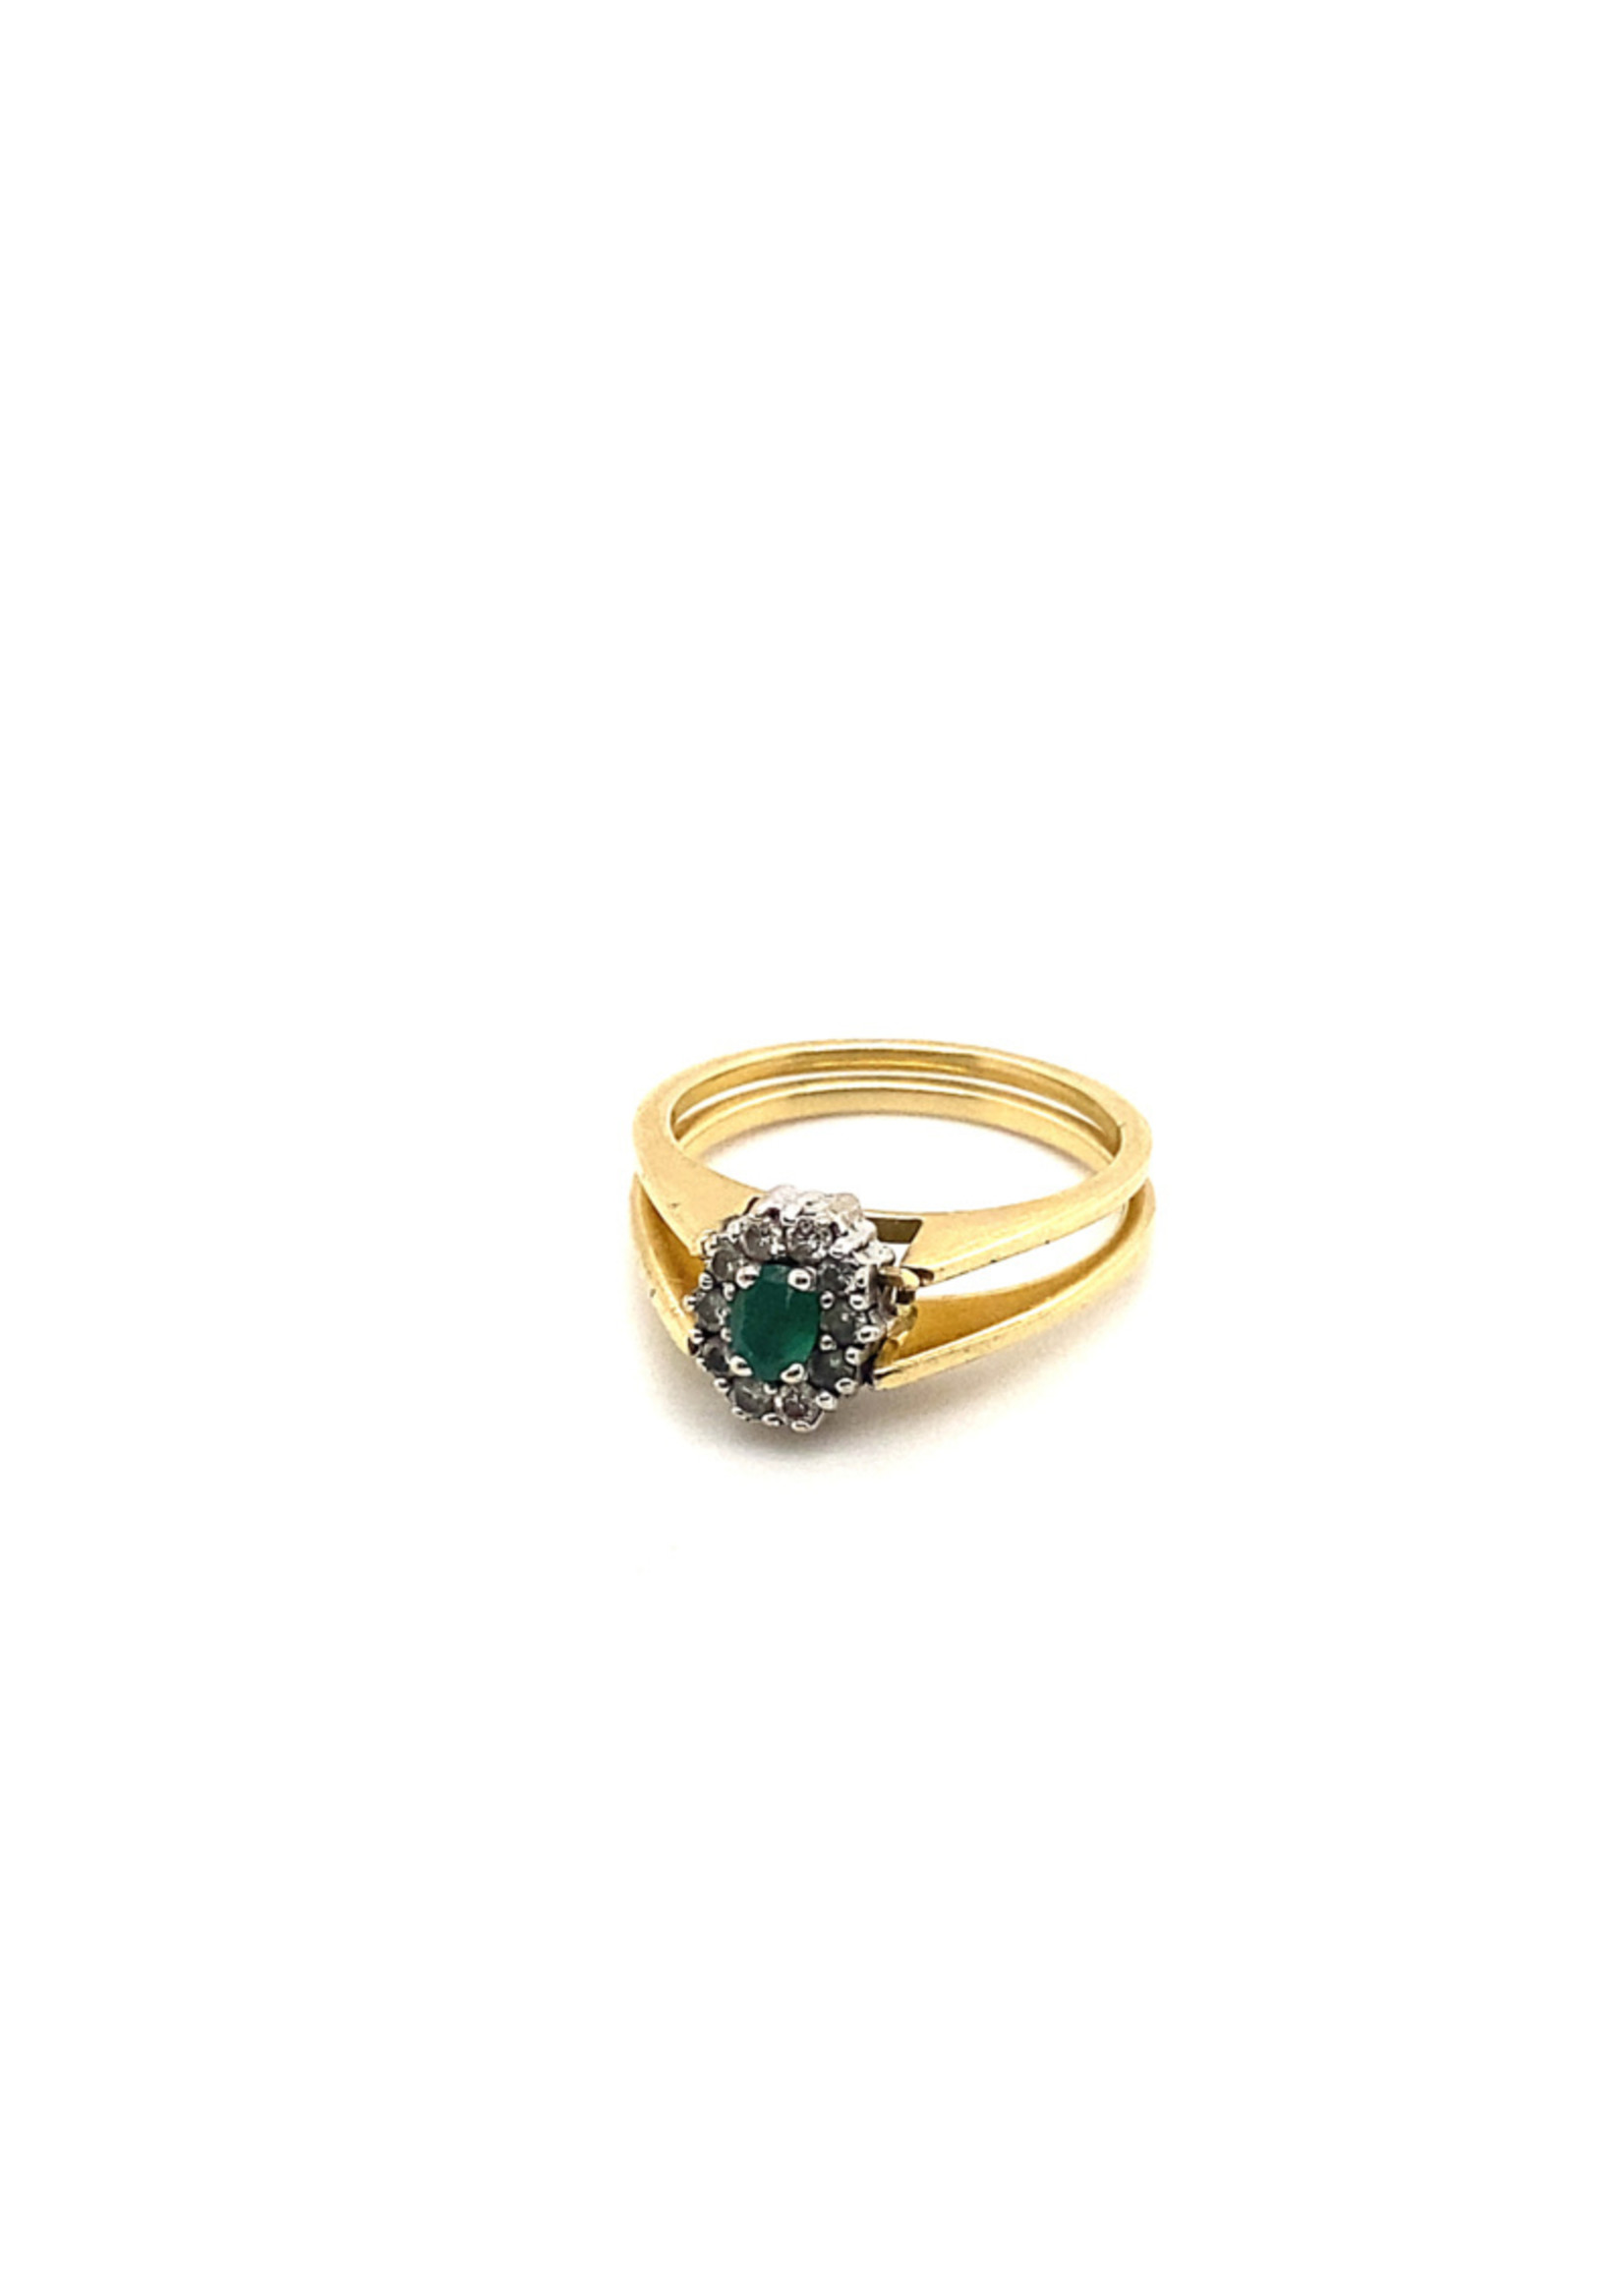 Vintage & Occasion Occasion wisselbare bicolor entourage ring met saffier, smaragd en diamant